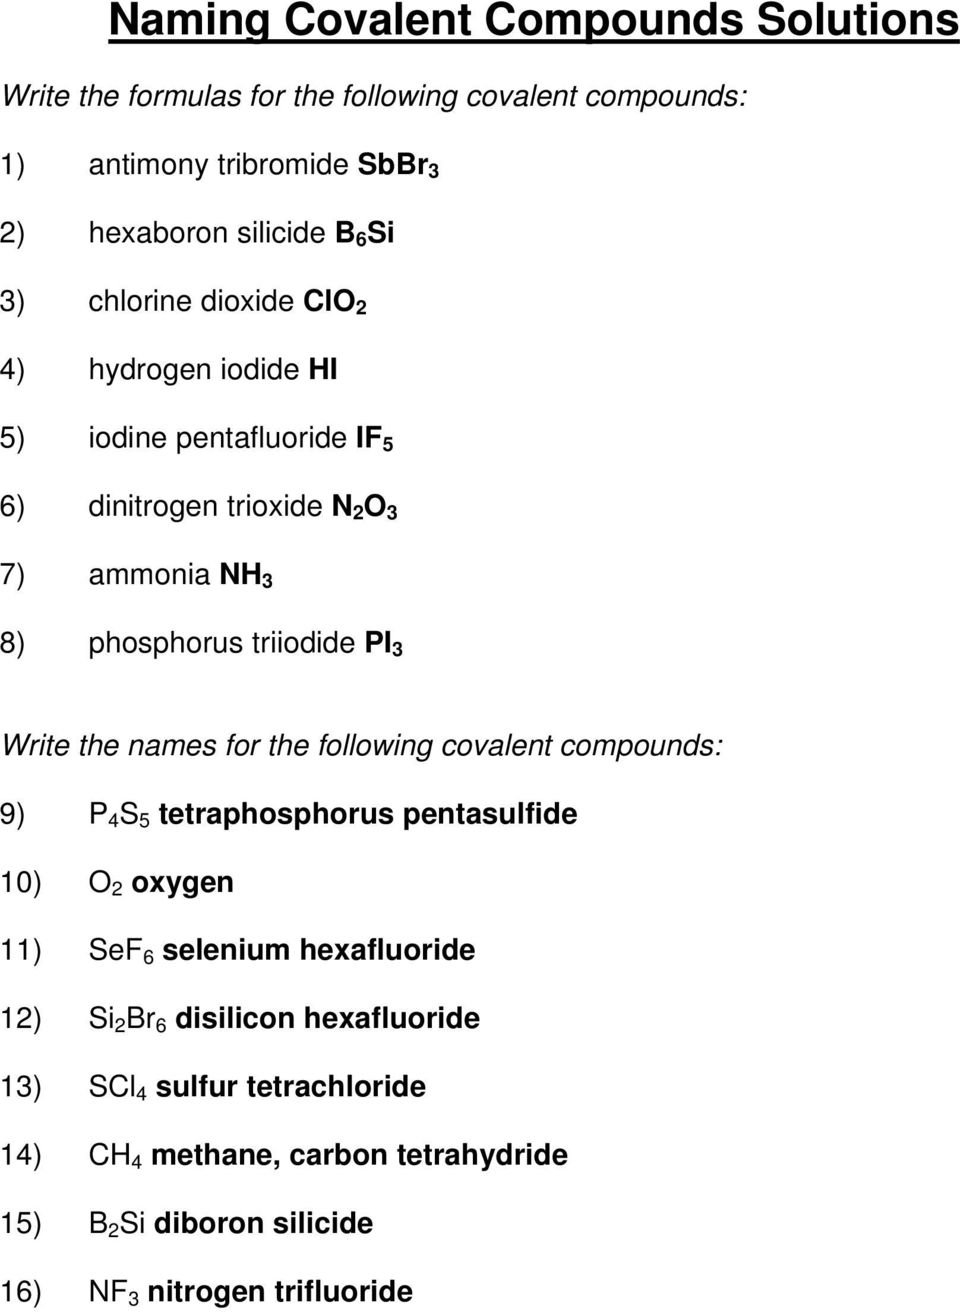 Naming Ionic Compounds Answer Key  Pdf Throughout Naming Ionic And Covalent Compounds Worksheet Answer Key